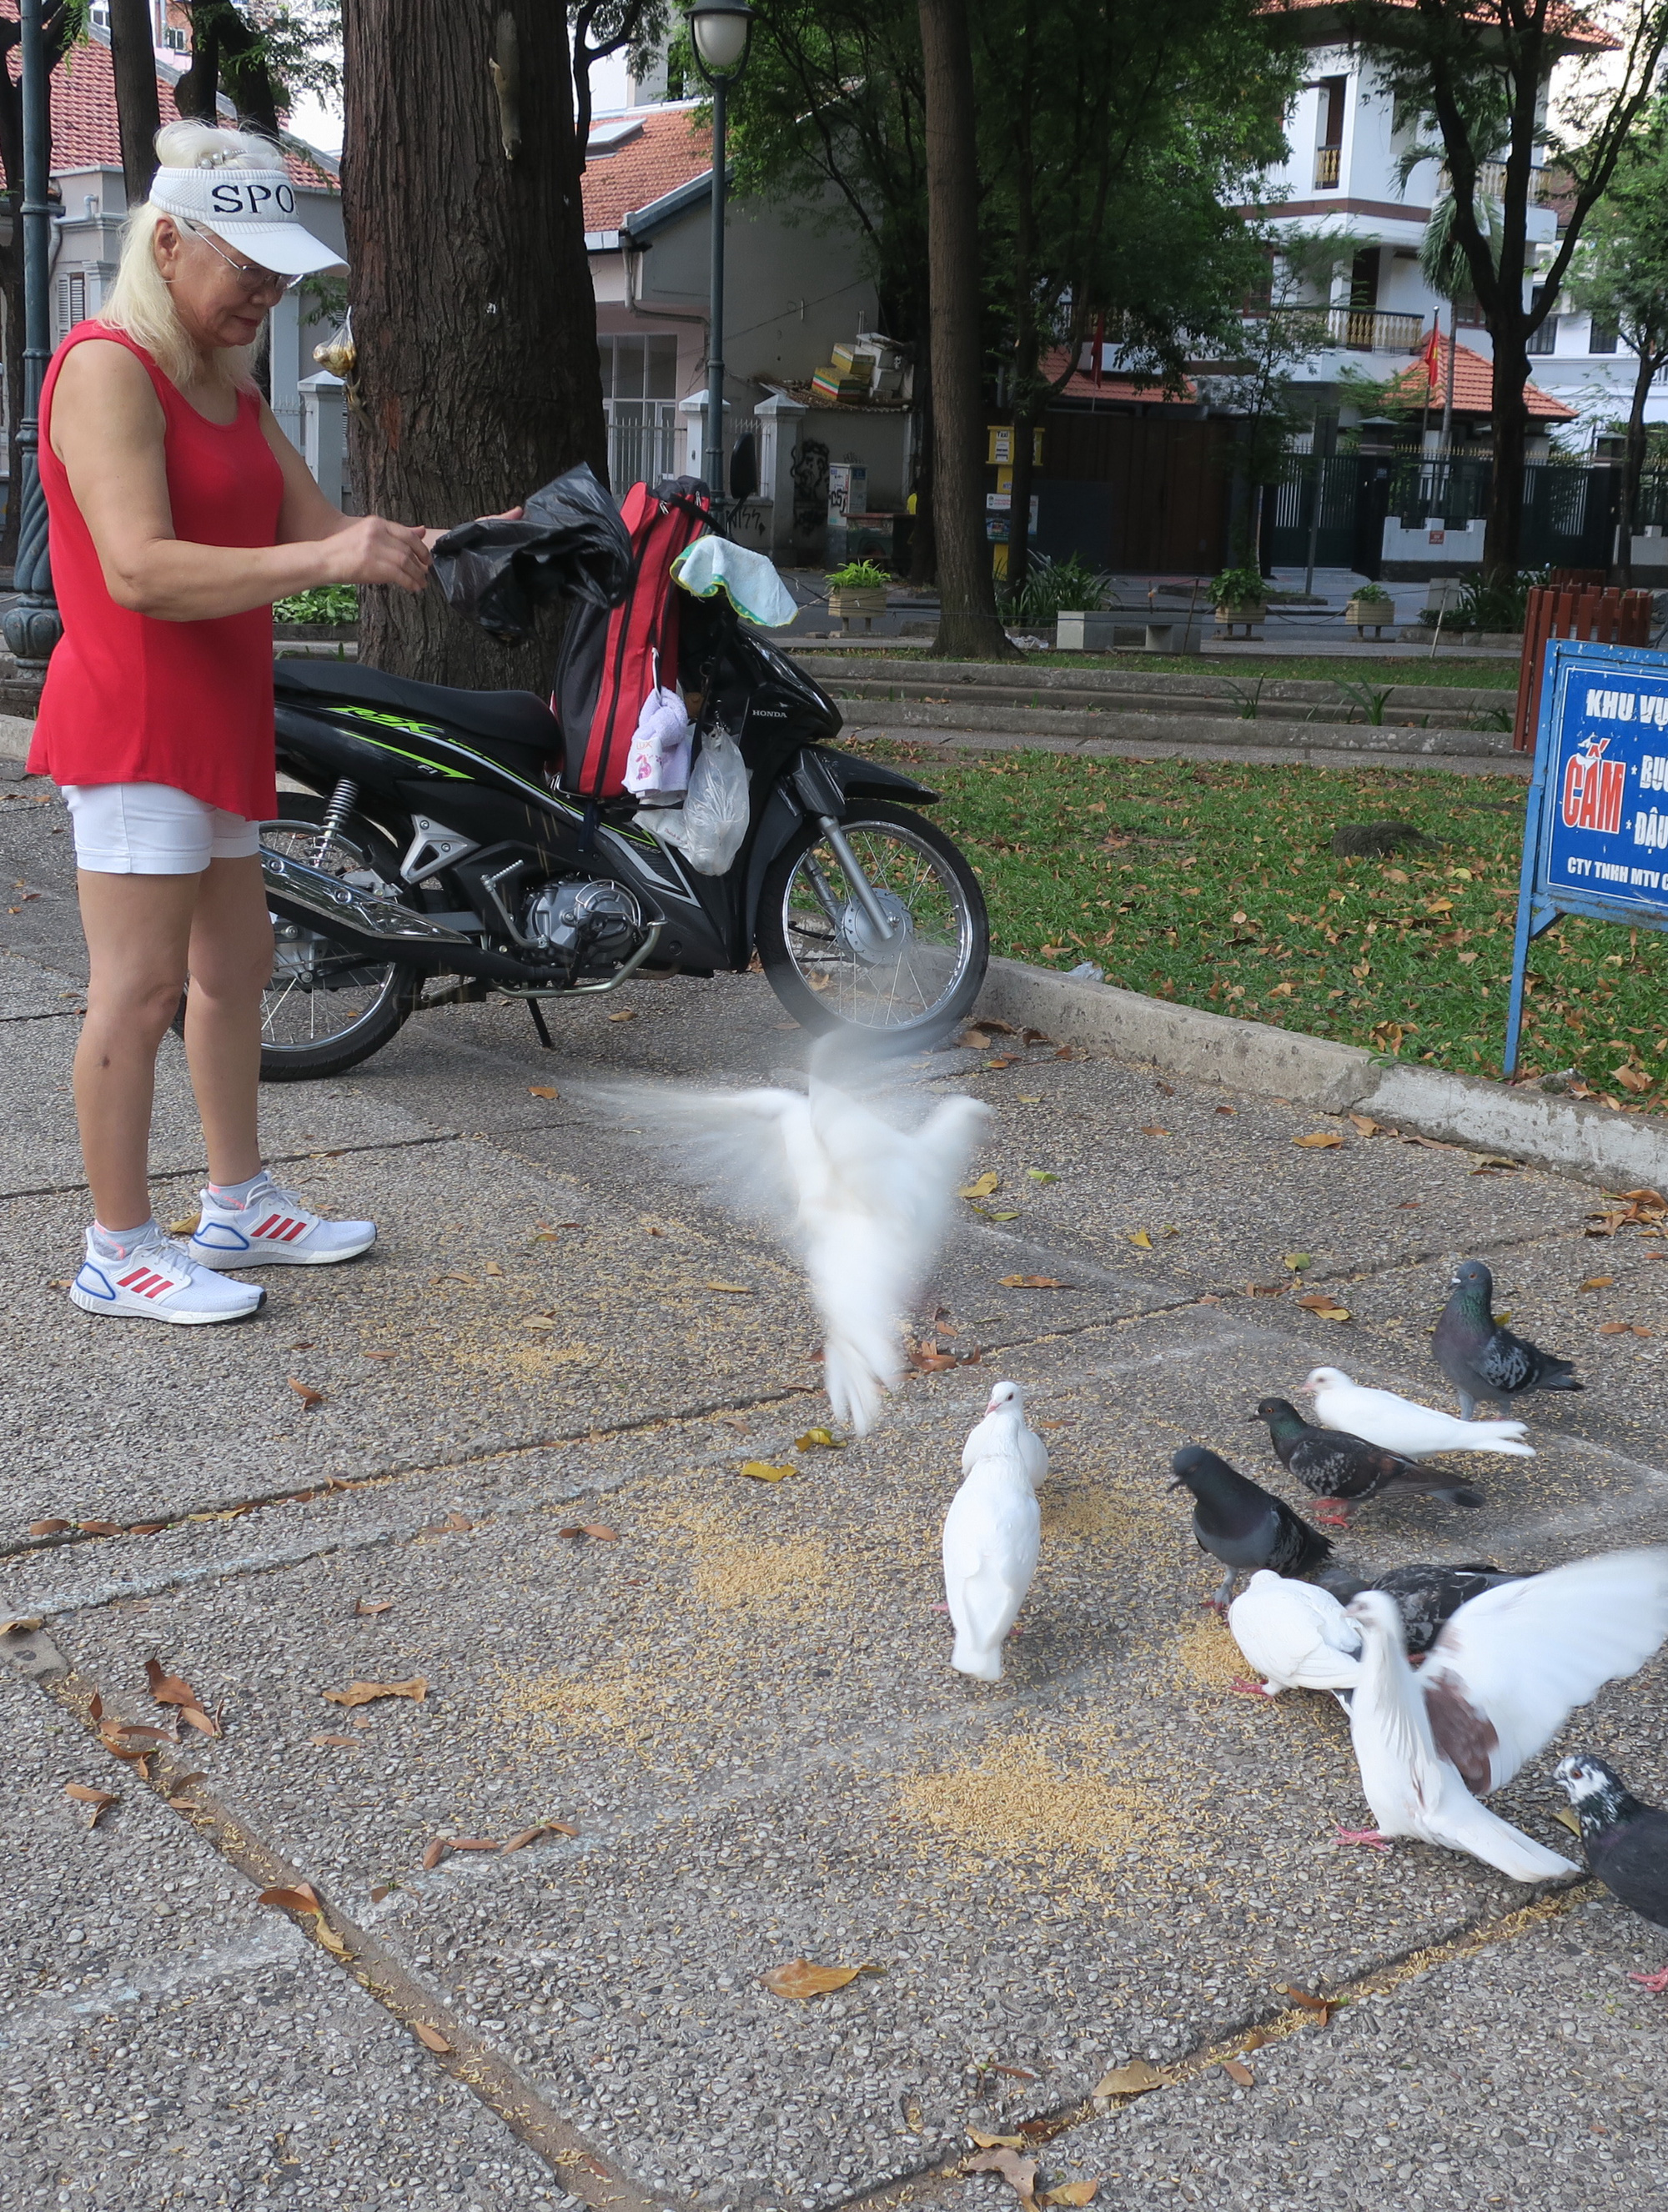 Kim Loan feeds pigeons in April 30 Park in Ho Chi Minh City, Vietnam. Photo: T.T.D. / Tuoi Tre